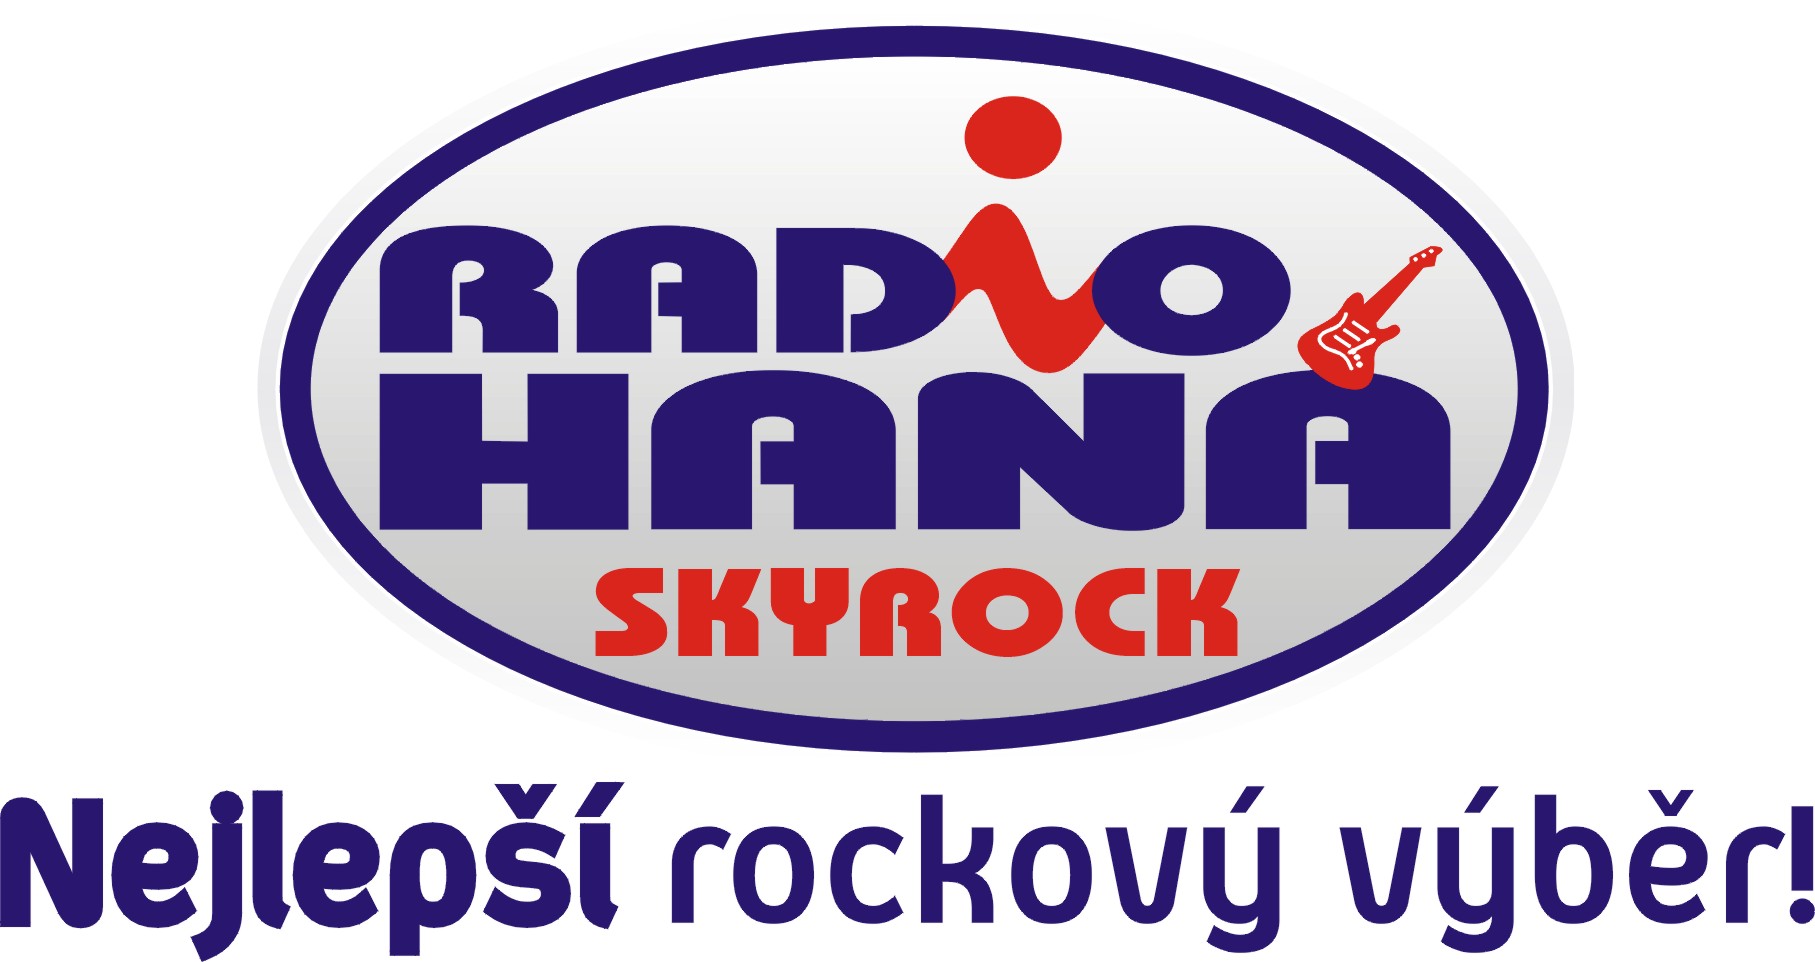 Radio Skyrock